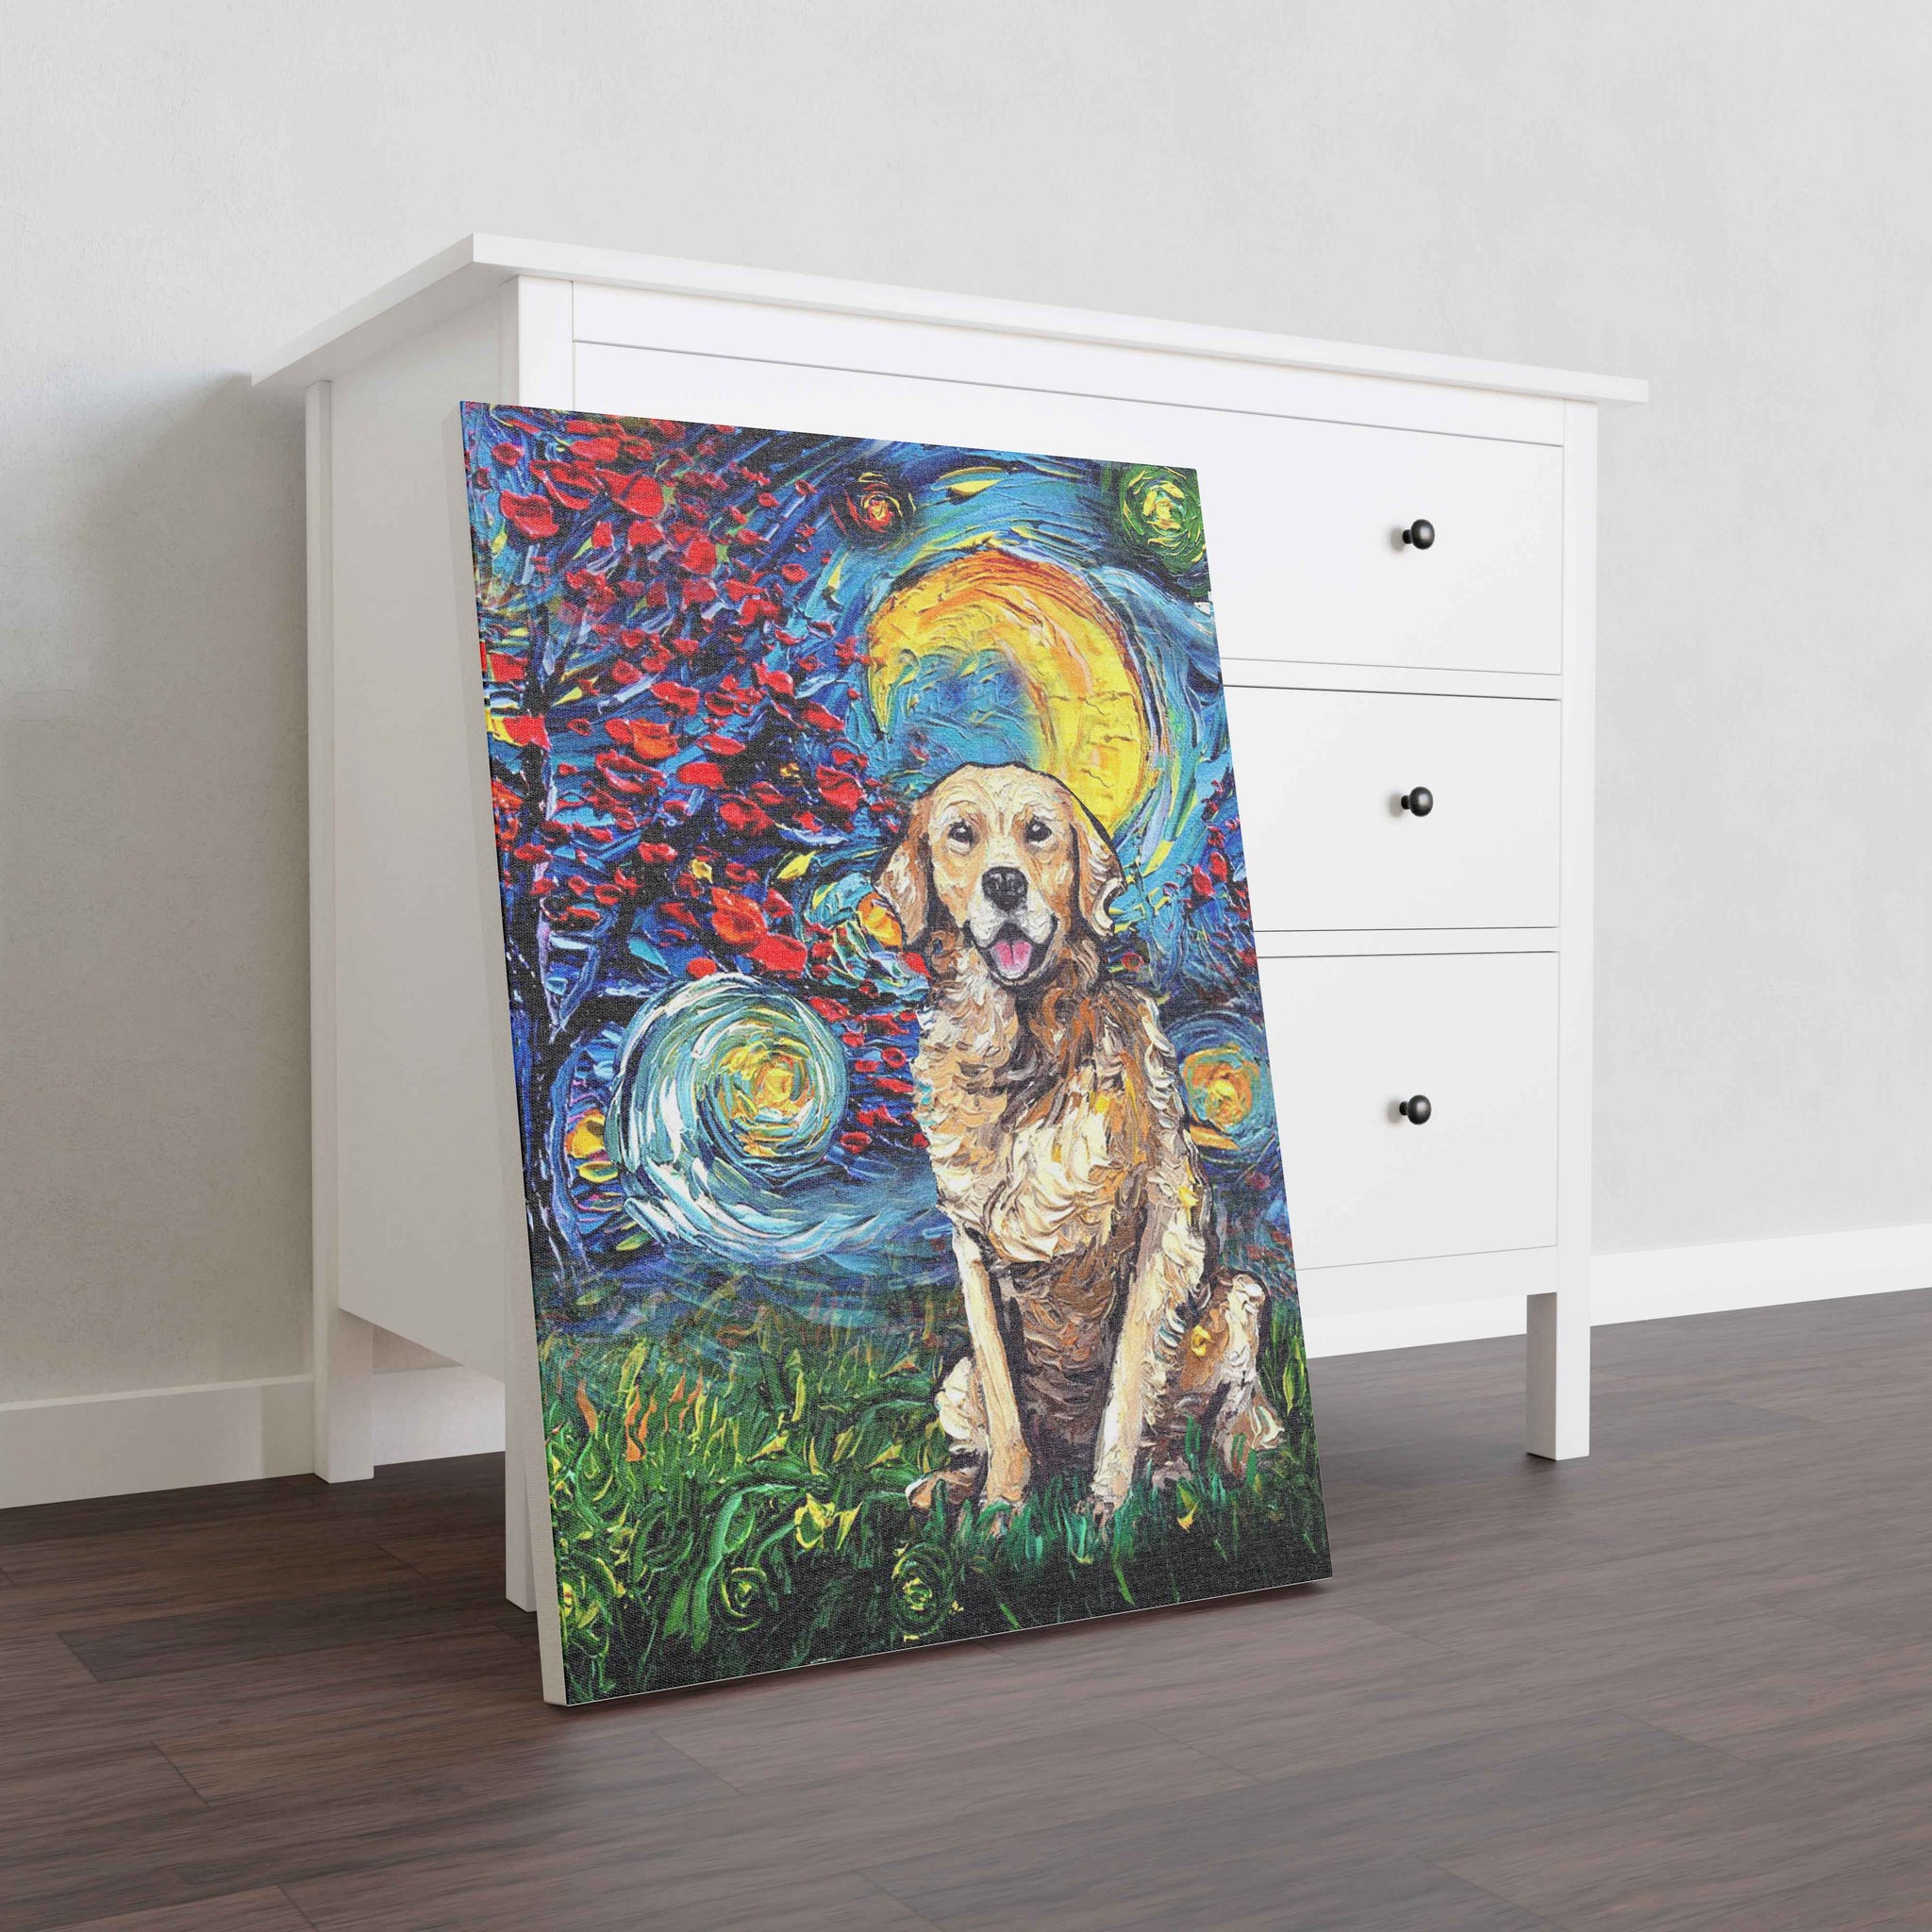 Skitongifts Poster No Frame, Wall Art, Home Decor Golden Retriever Dog Starry Night Style Halloween-TT1008